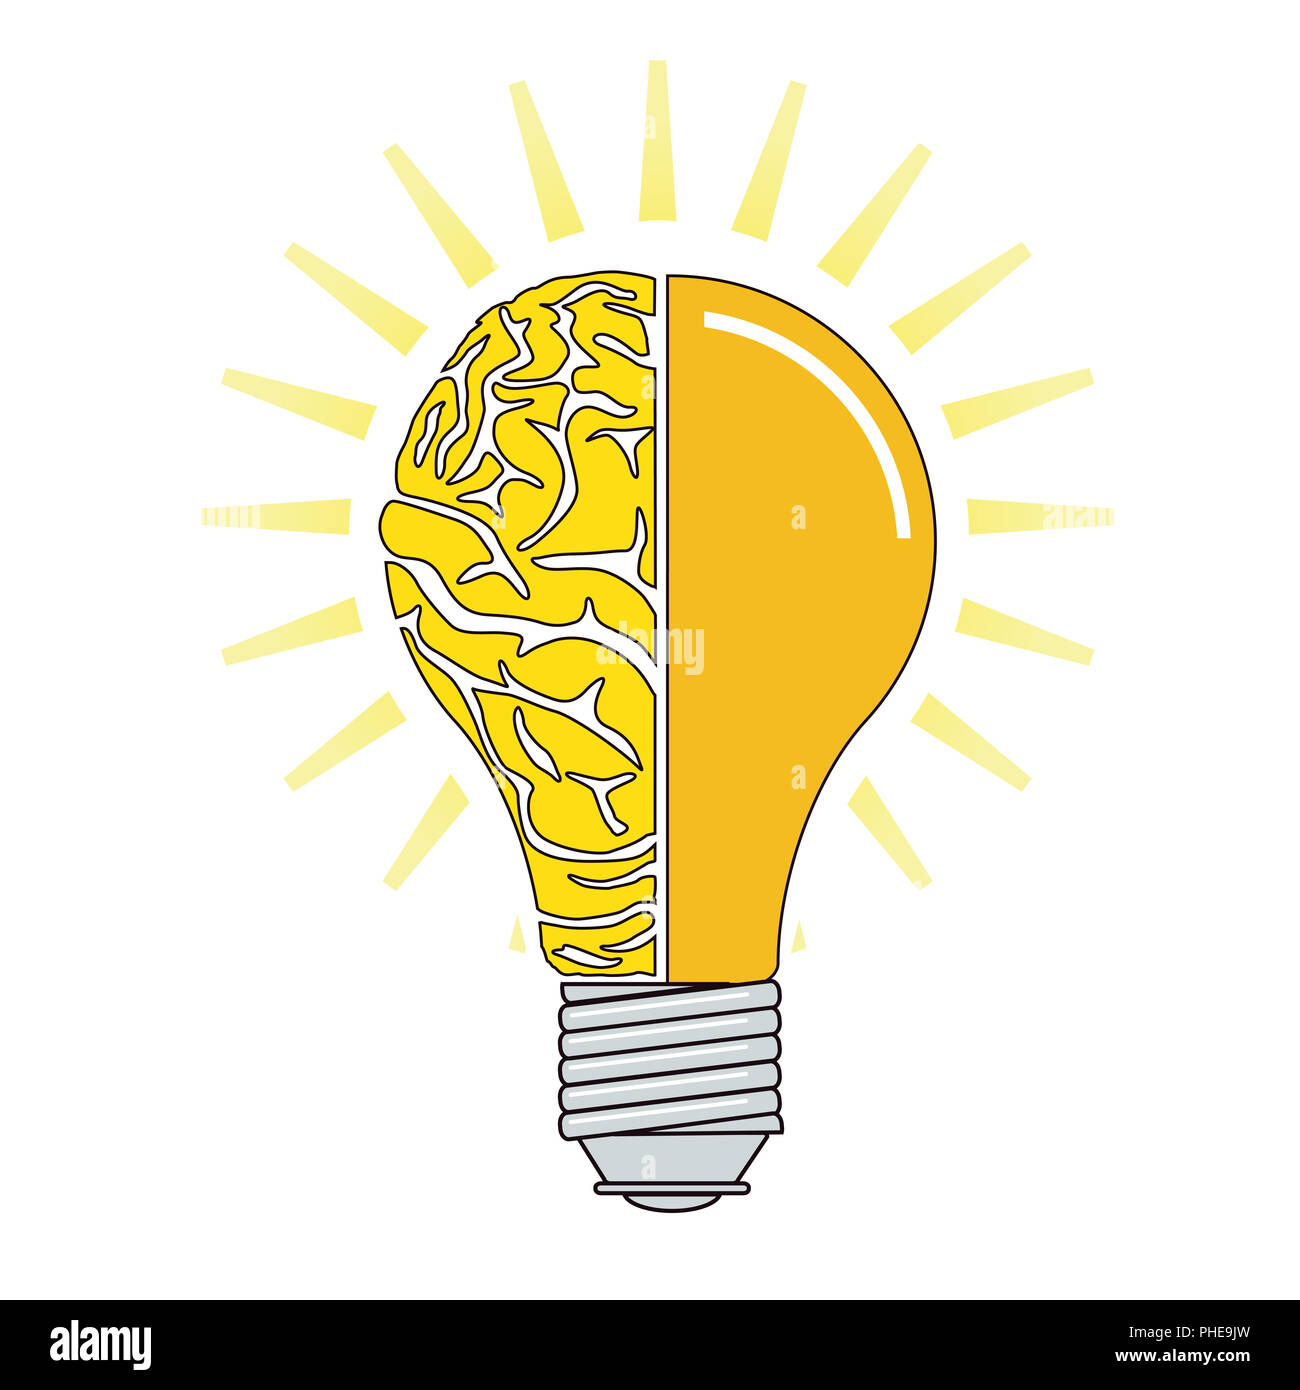 think, brain symbol illustration Stock Photo